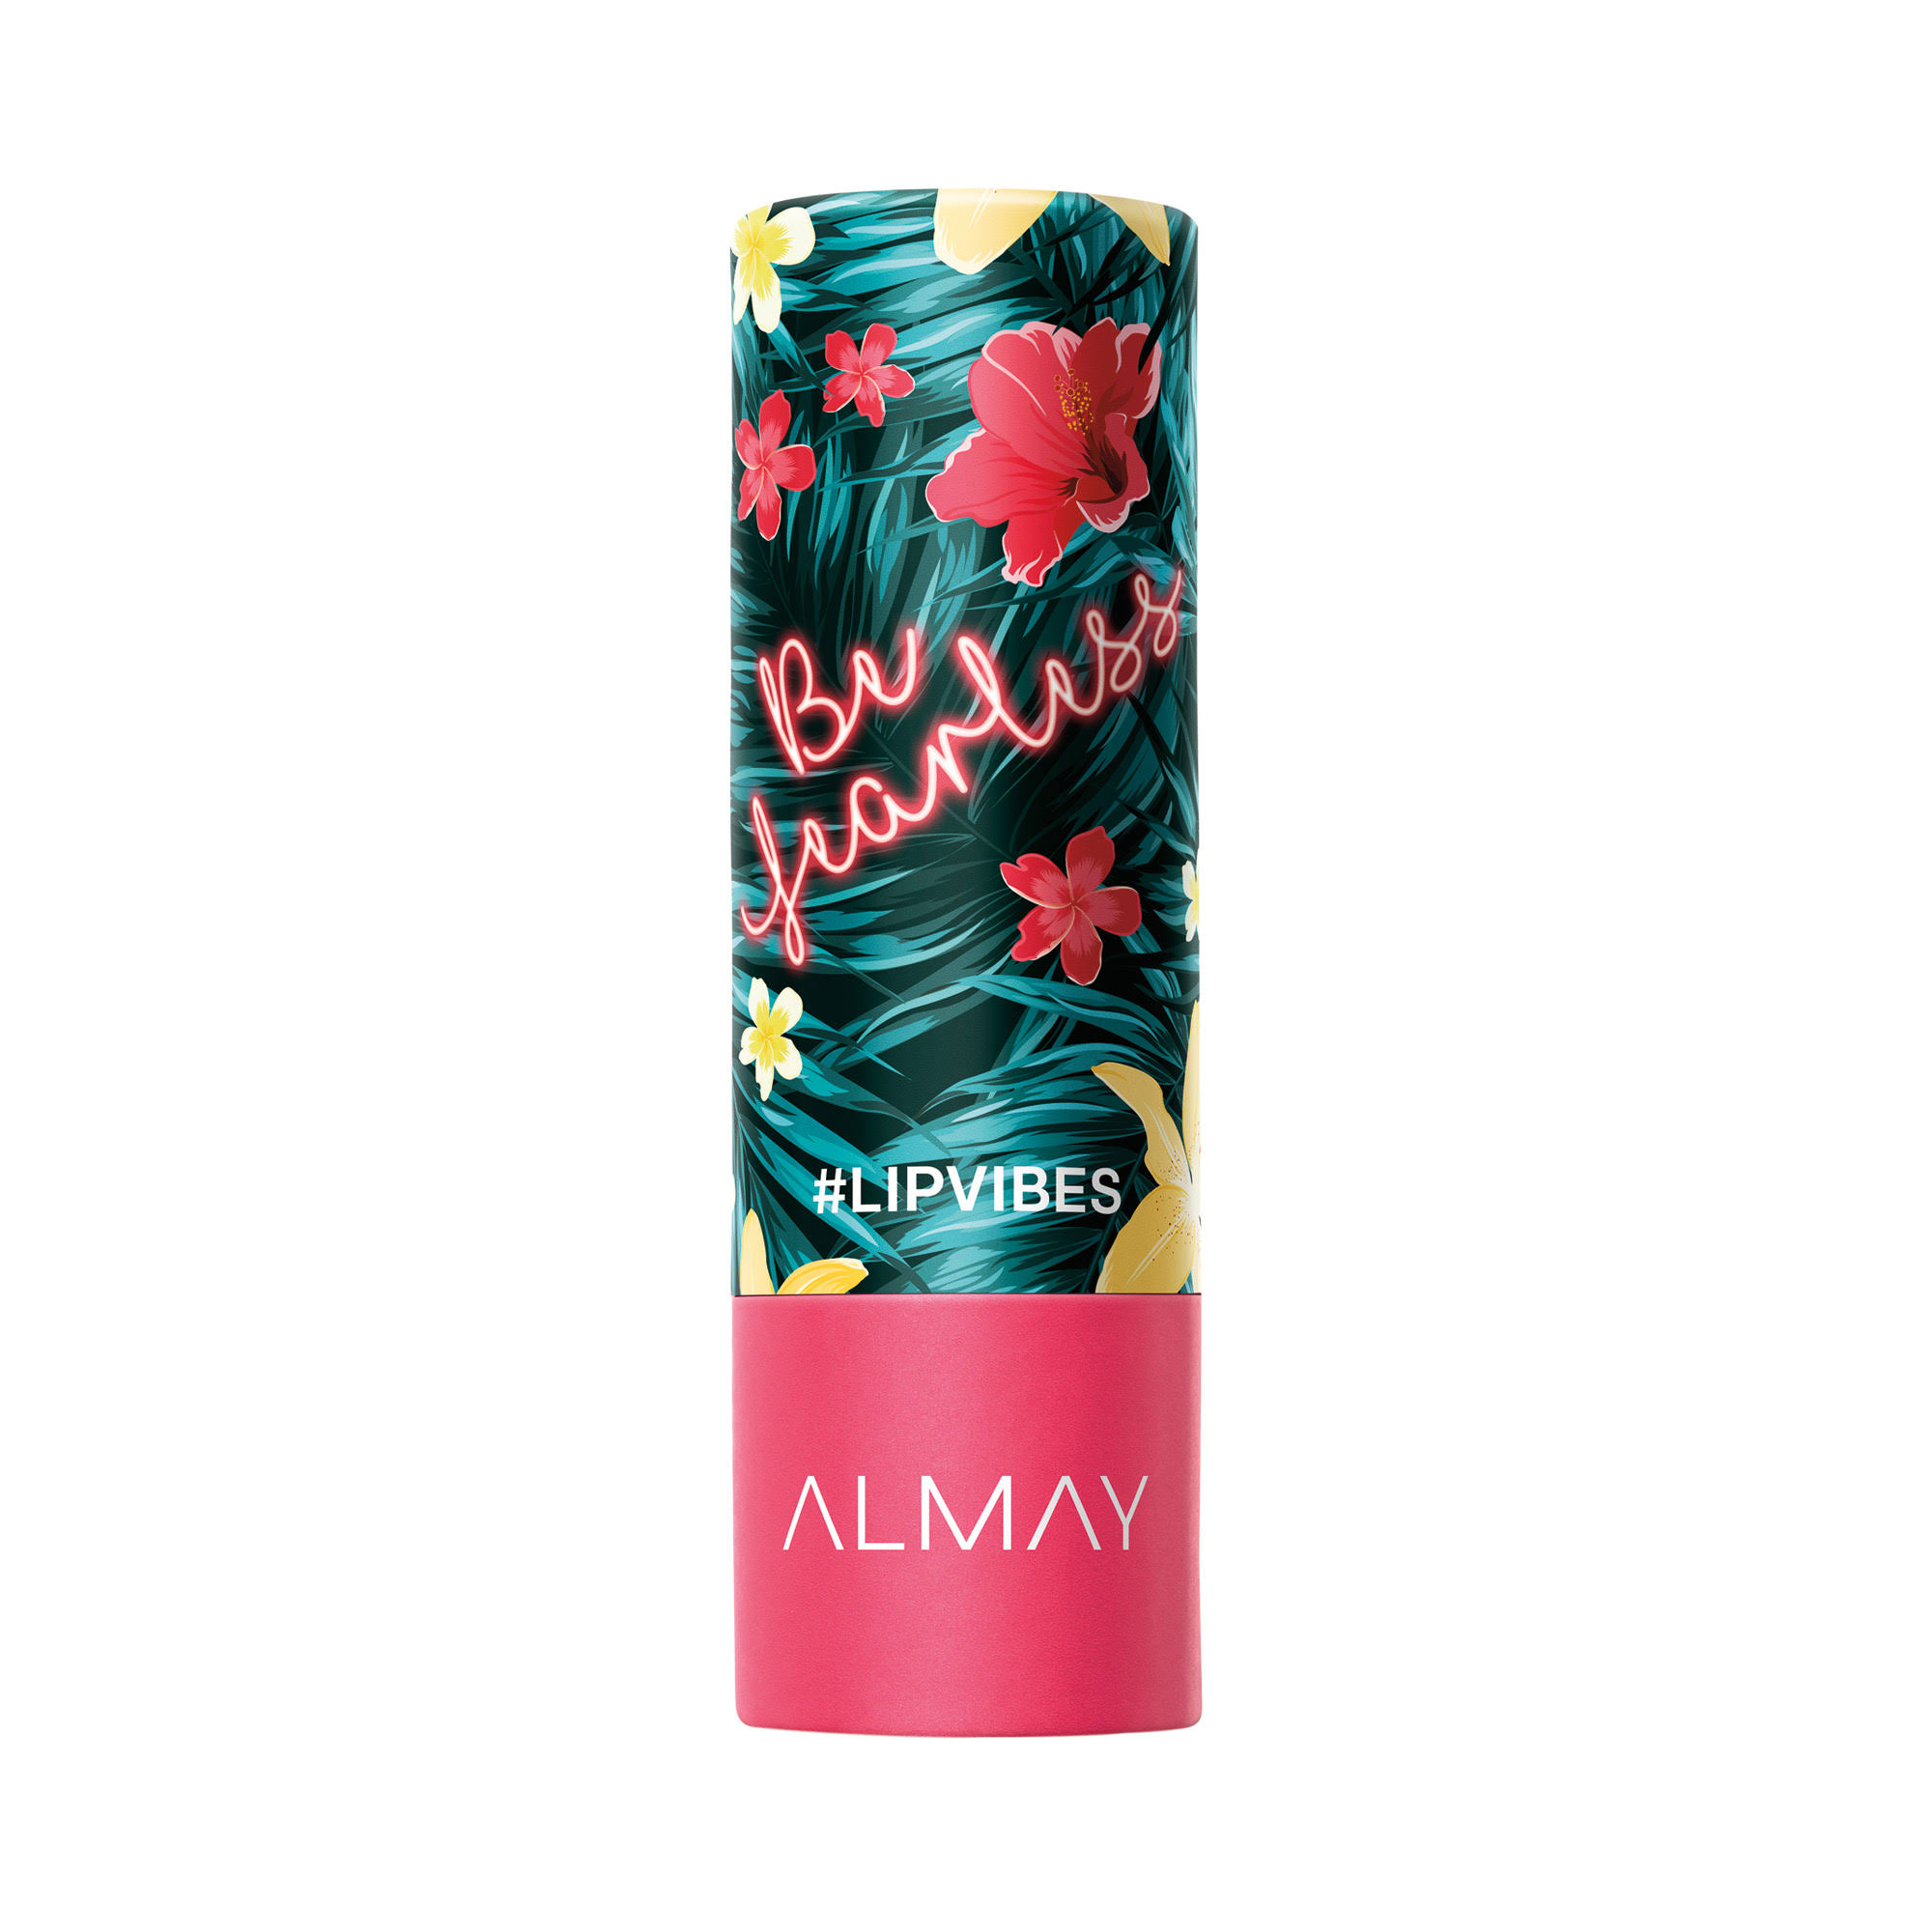 Almay Lip Vibes Matte Lipstick - Be Fearless, 0.14oz